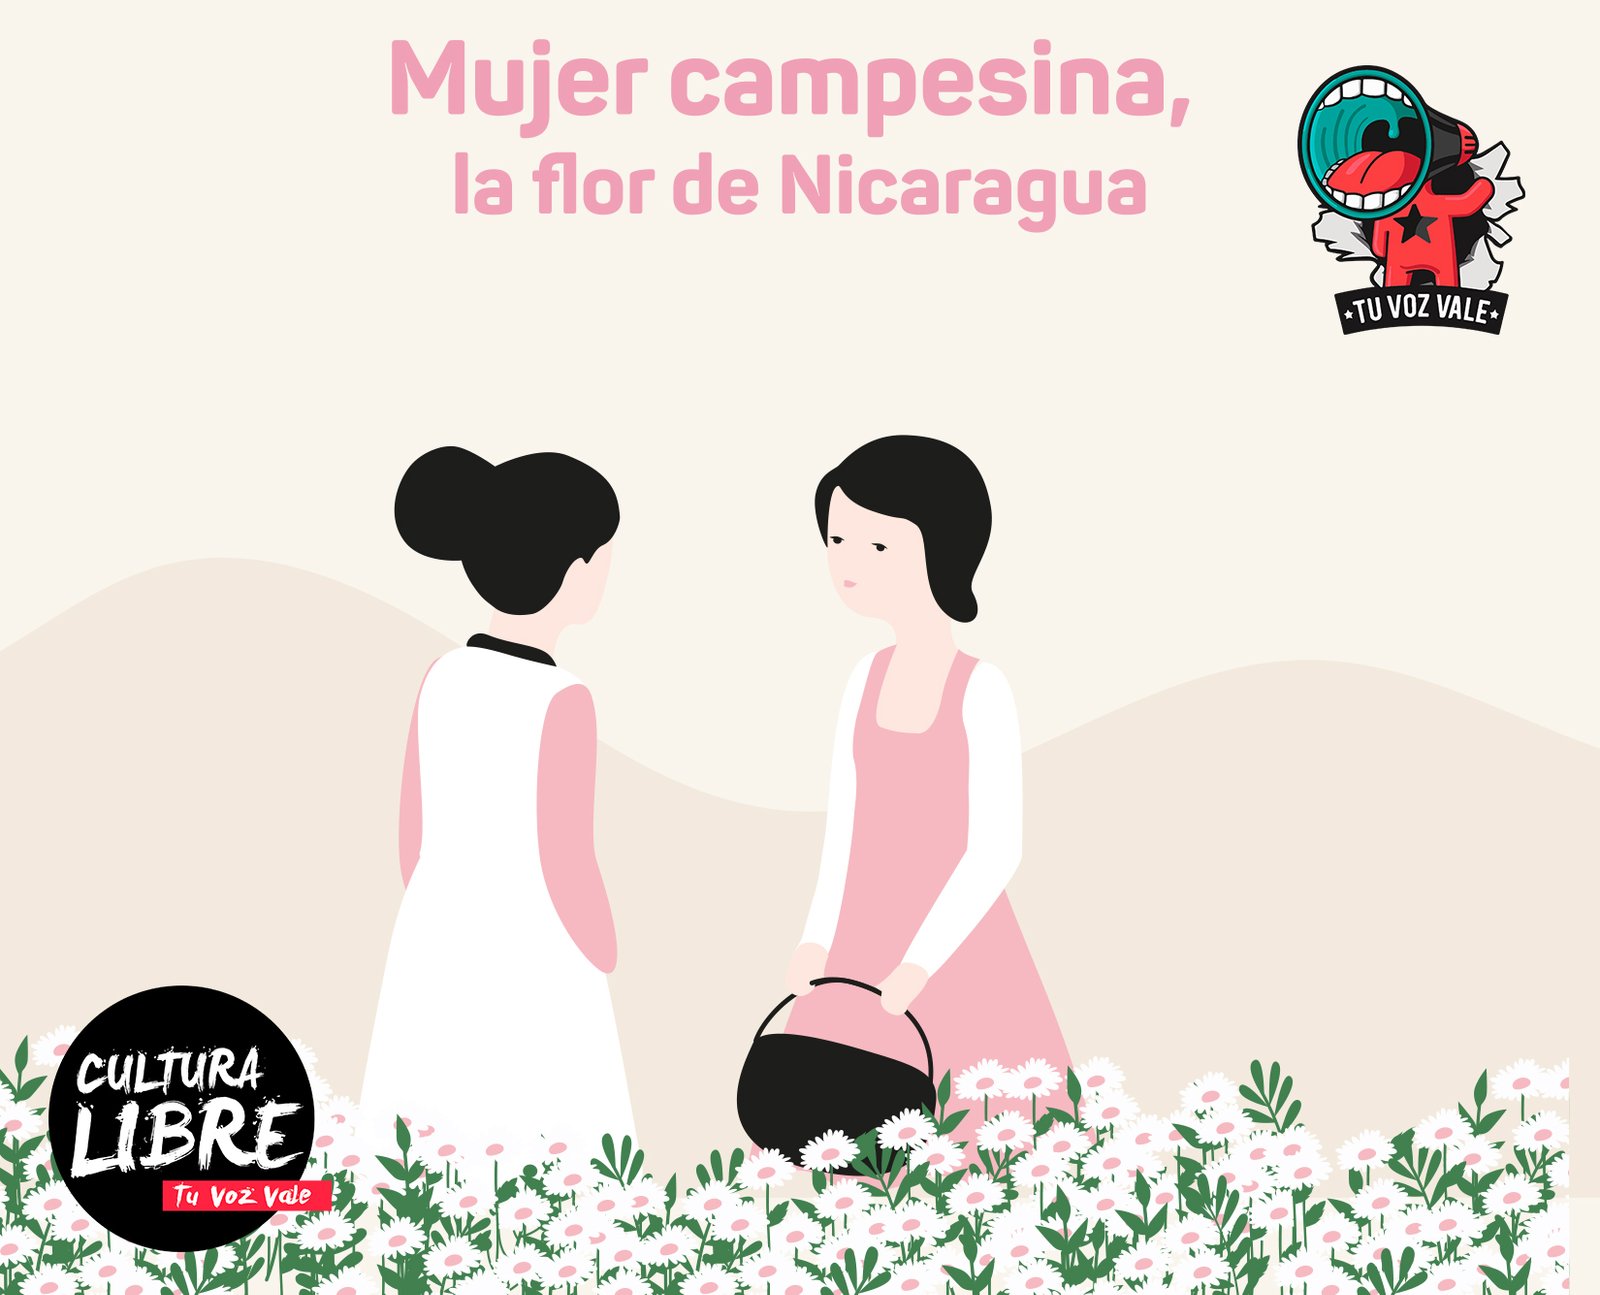 Mujer campesina, la flor de Nicaragua